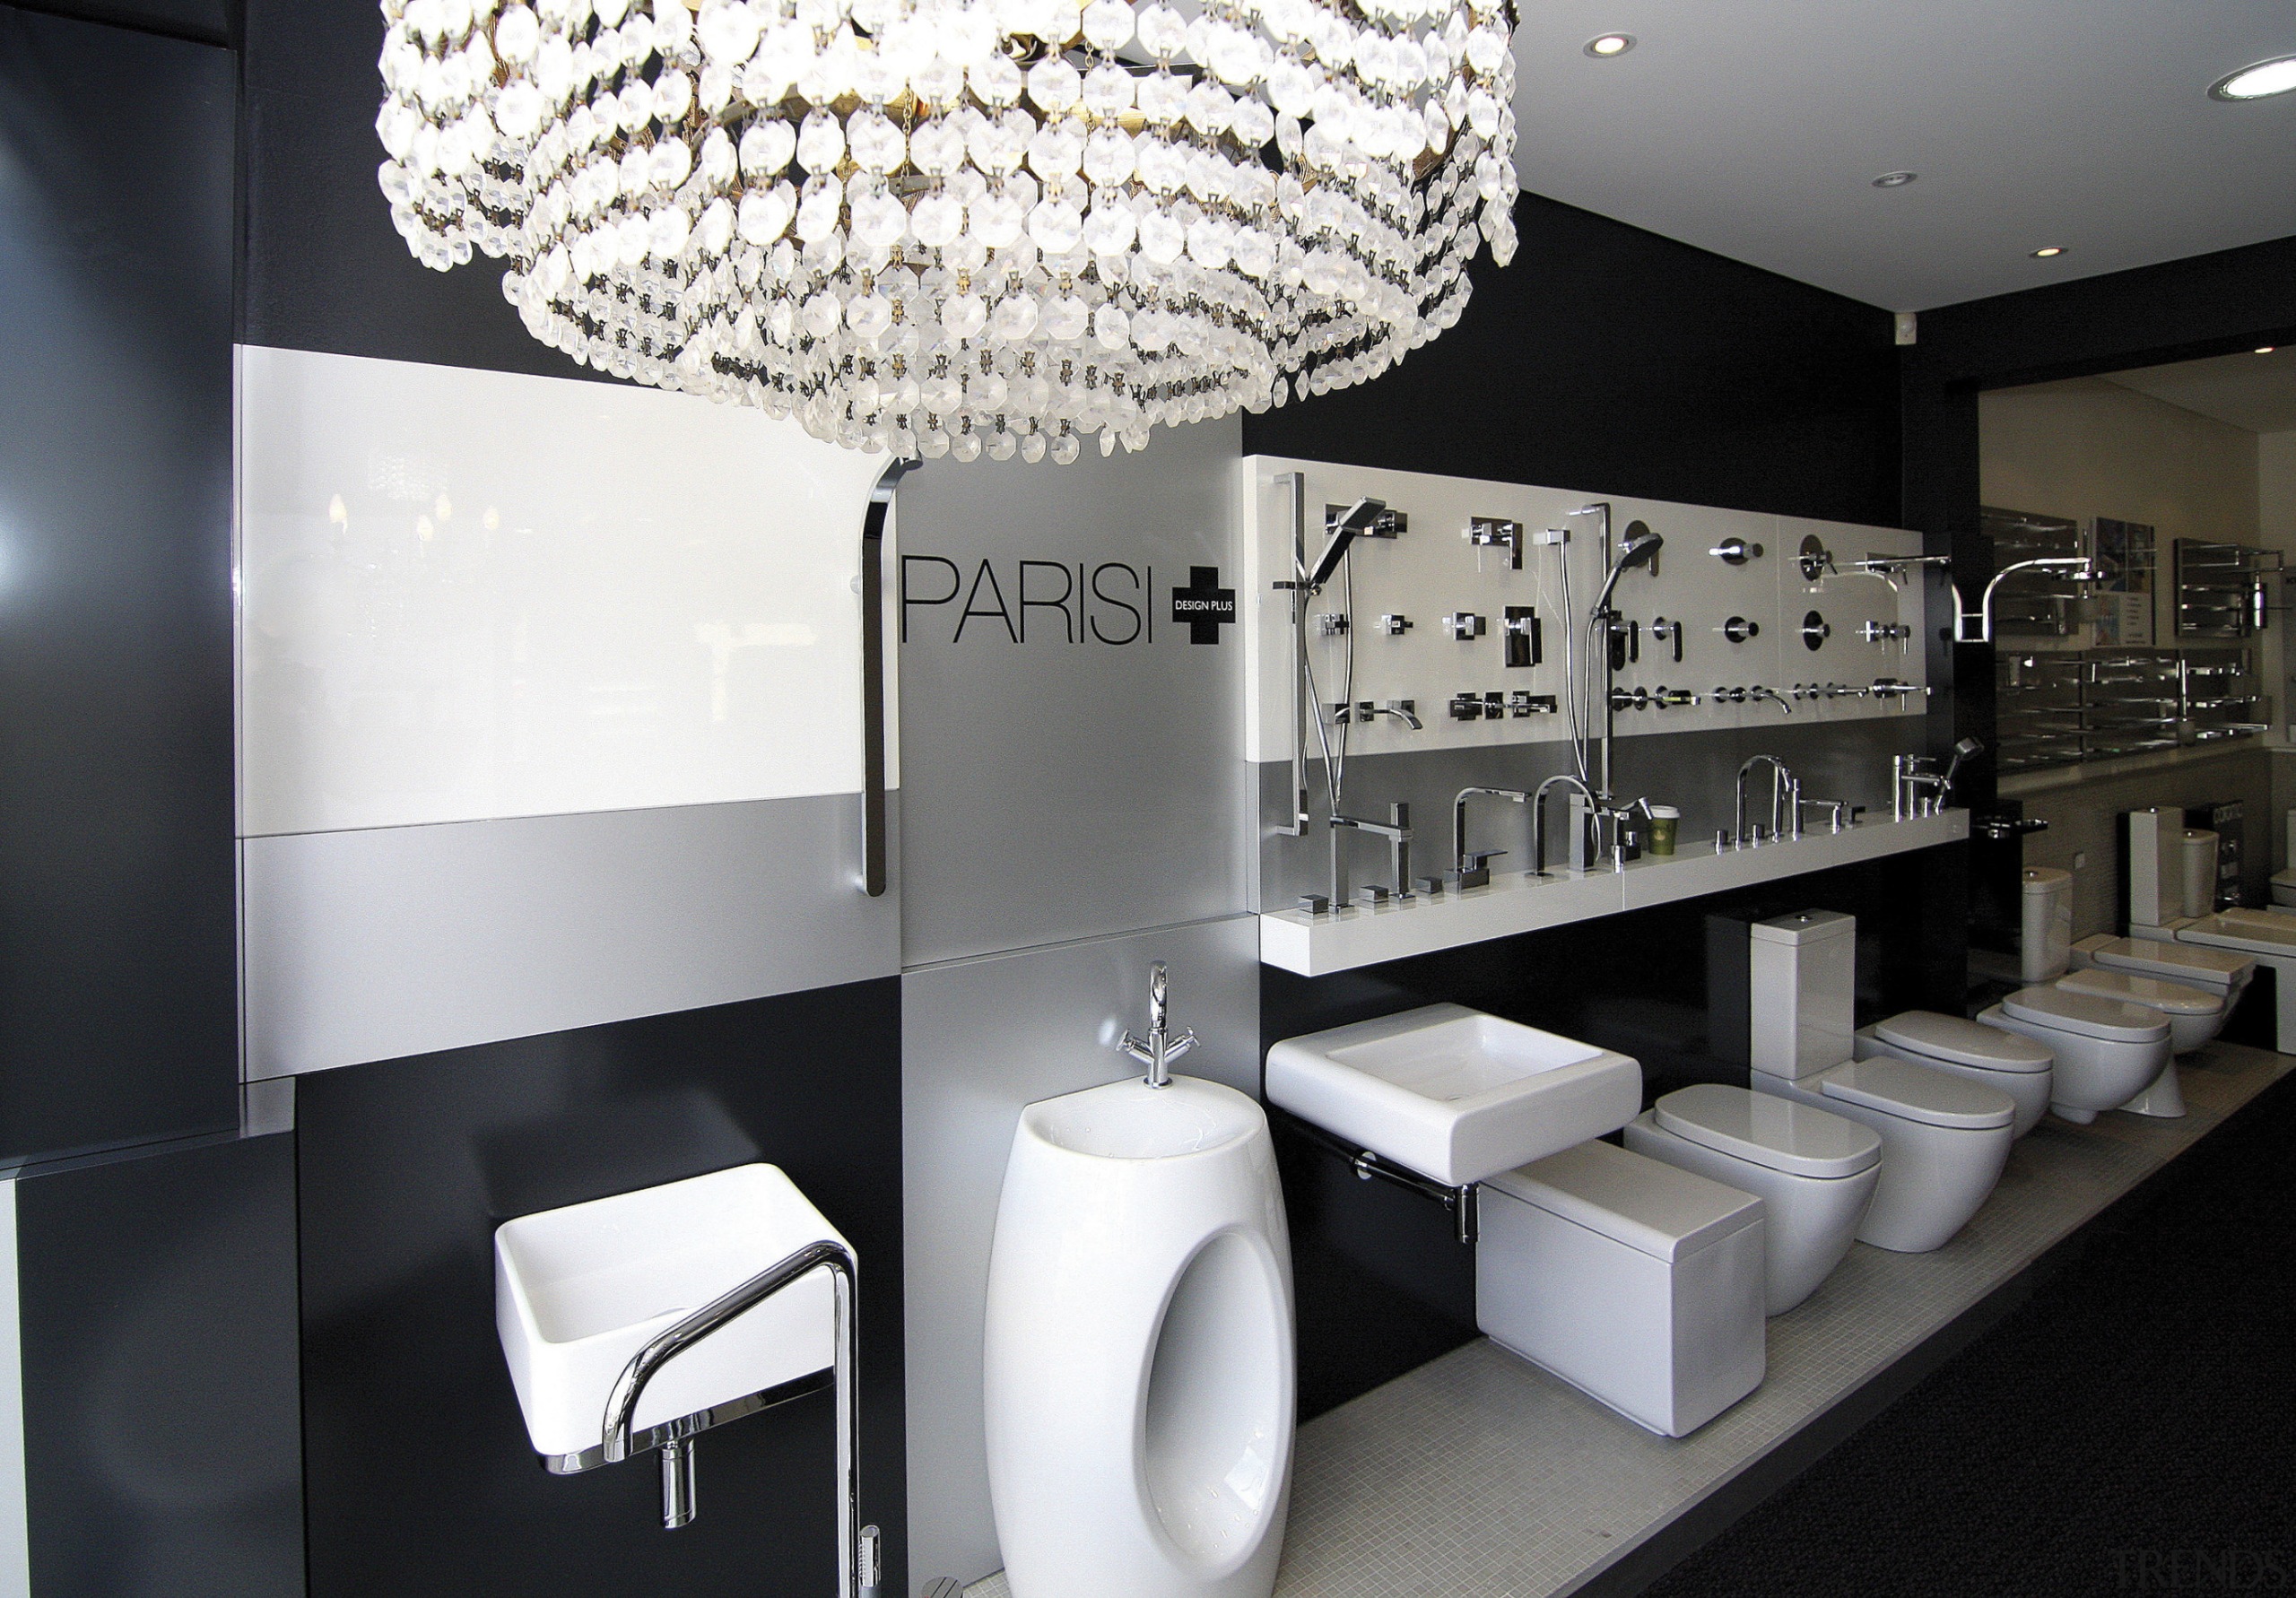 View of contemporary bathroom fixtures. - View of ceiling, interior design, light fixture, lighting, product design, black, white